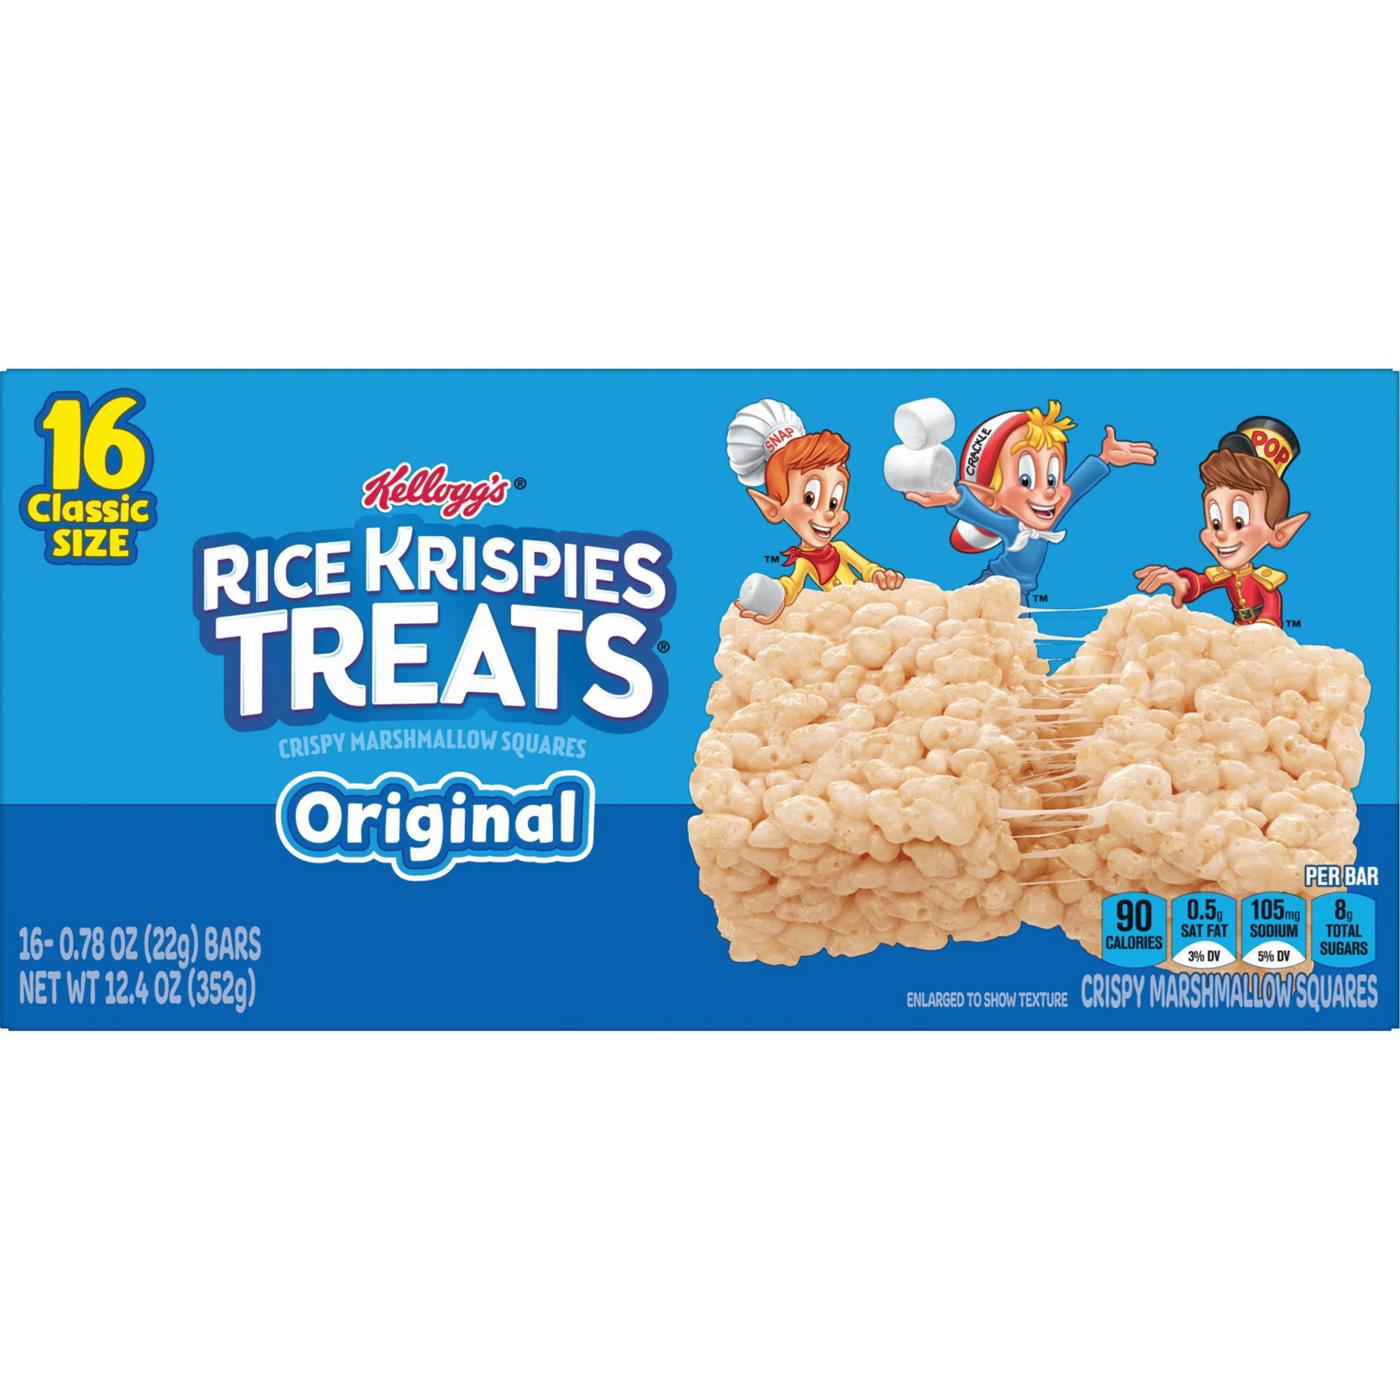 Rice Krispies Treats Original Crispy Marshmallow Squares; image 6 of 6